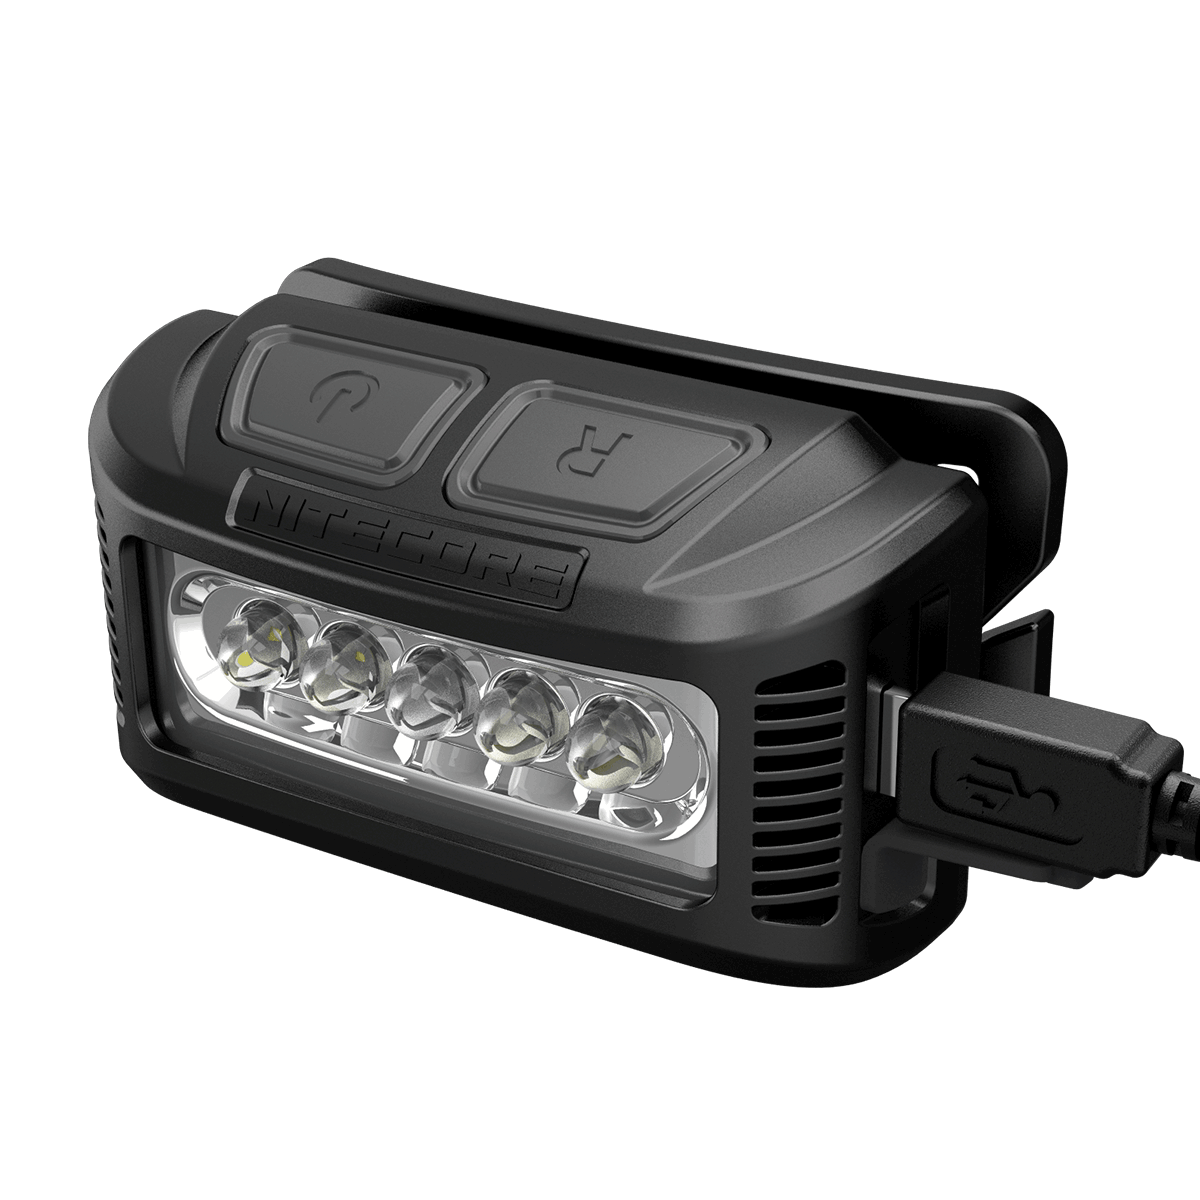 Nitecore NU10 CRI LED 160 Lumens Rechargeable Headlamp 